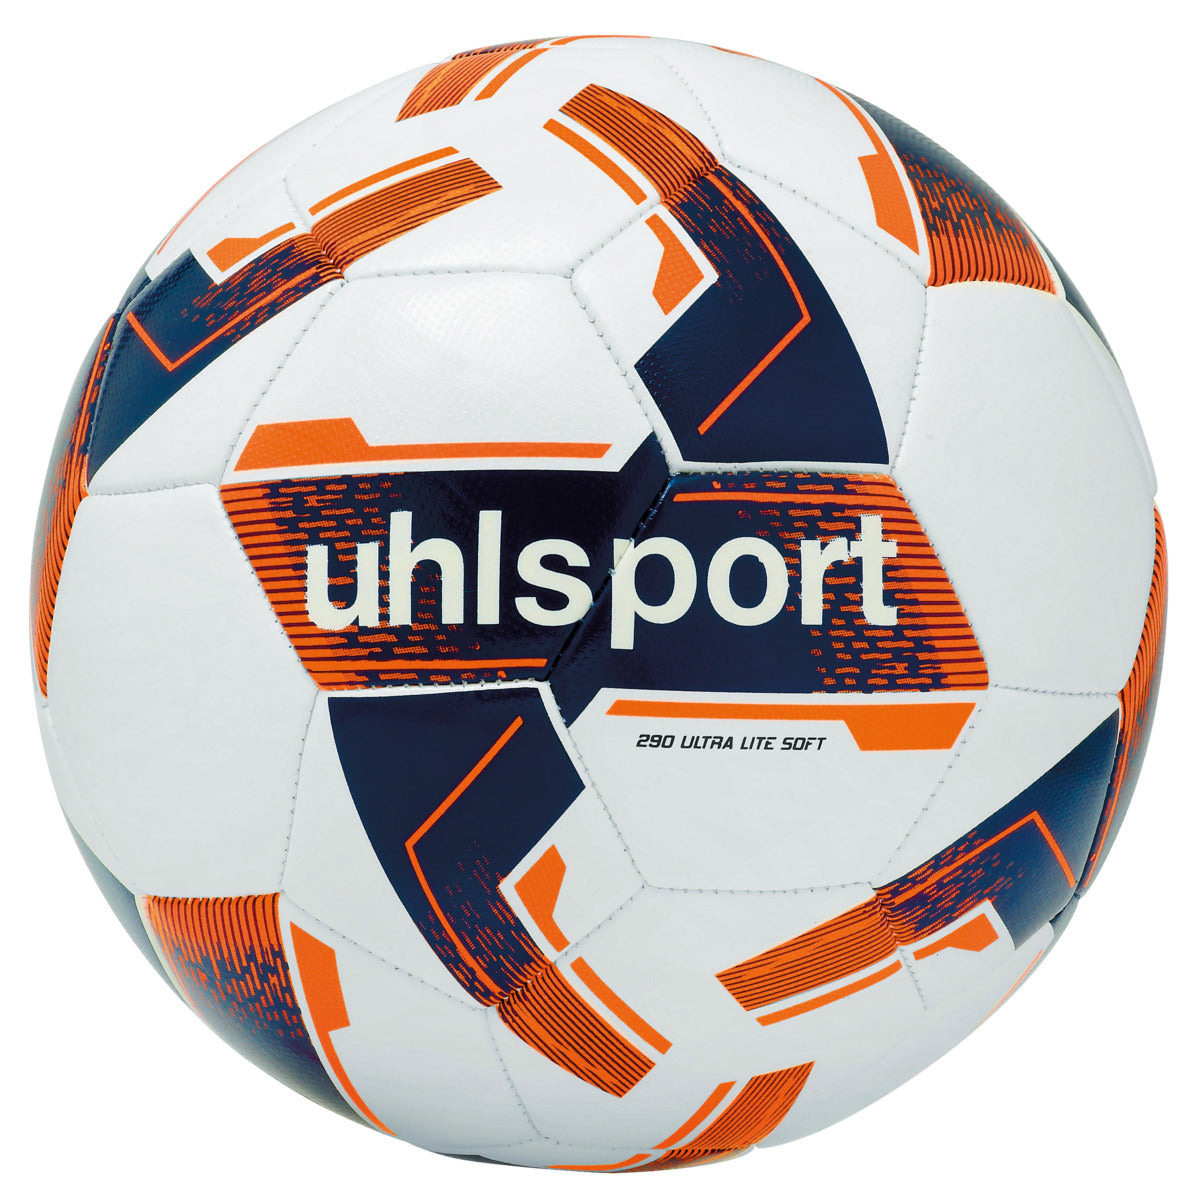 Uhlsport 290 Ultra Lite Soft - White/Navy/Fluo Orange